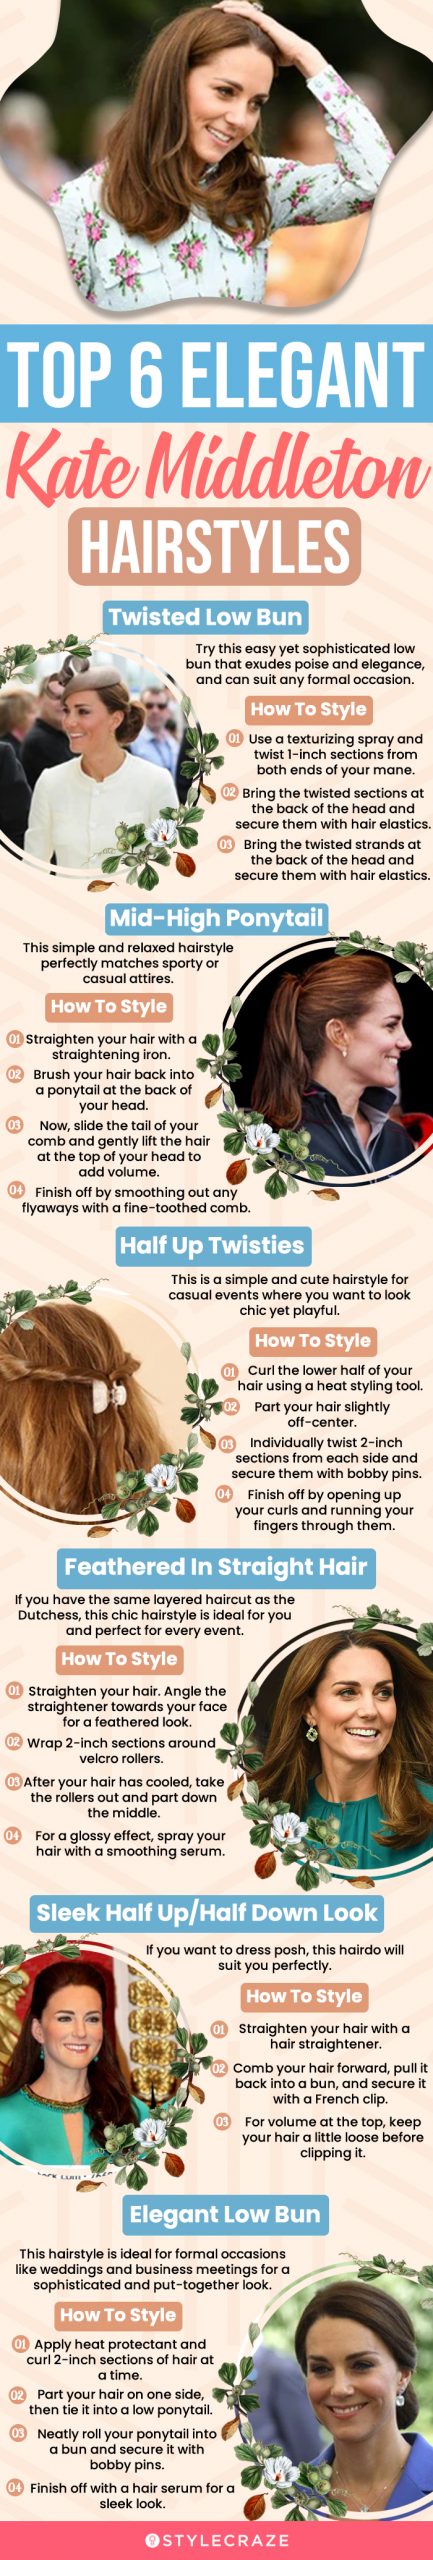 top 6 elegant kate middleton hairstyles (infographic)